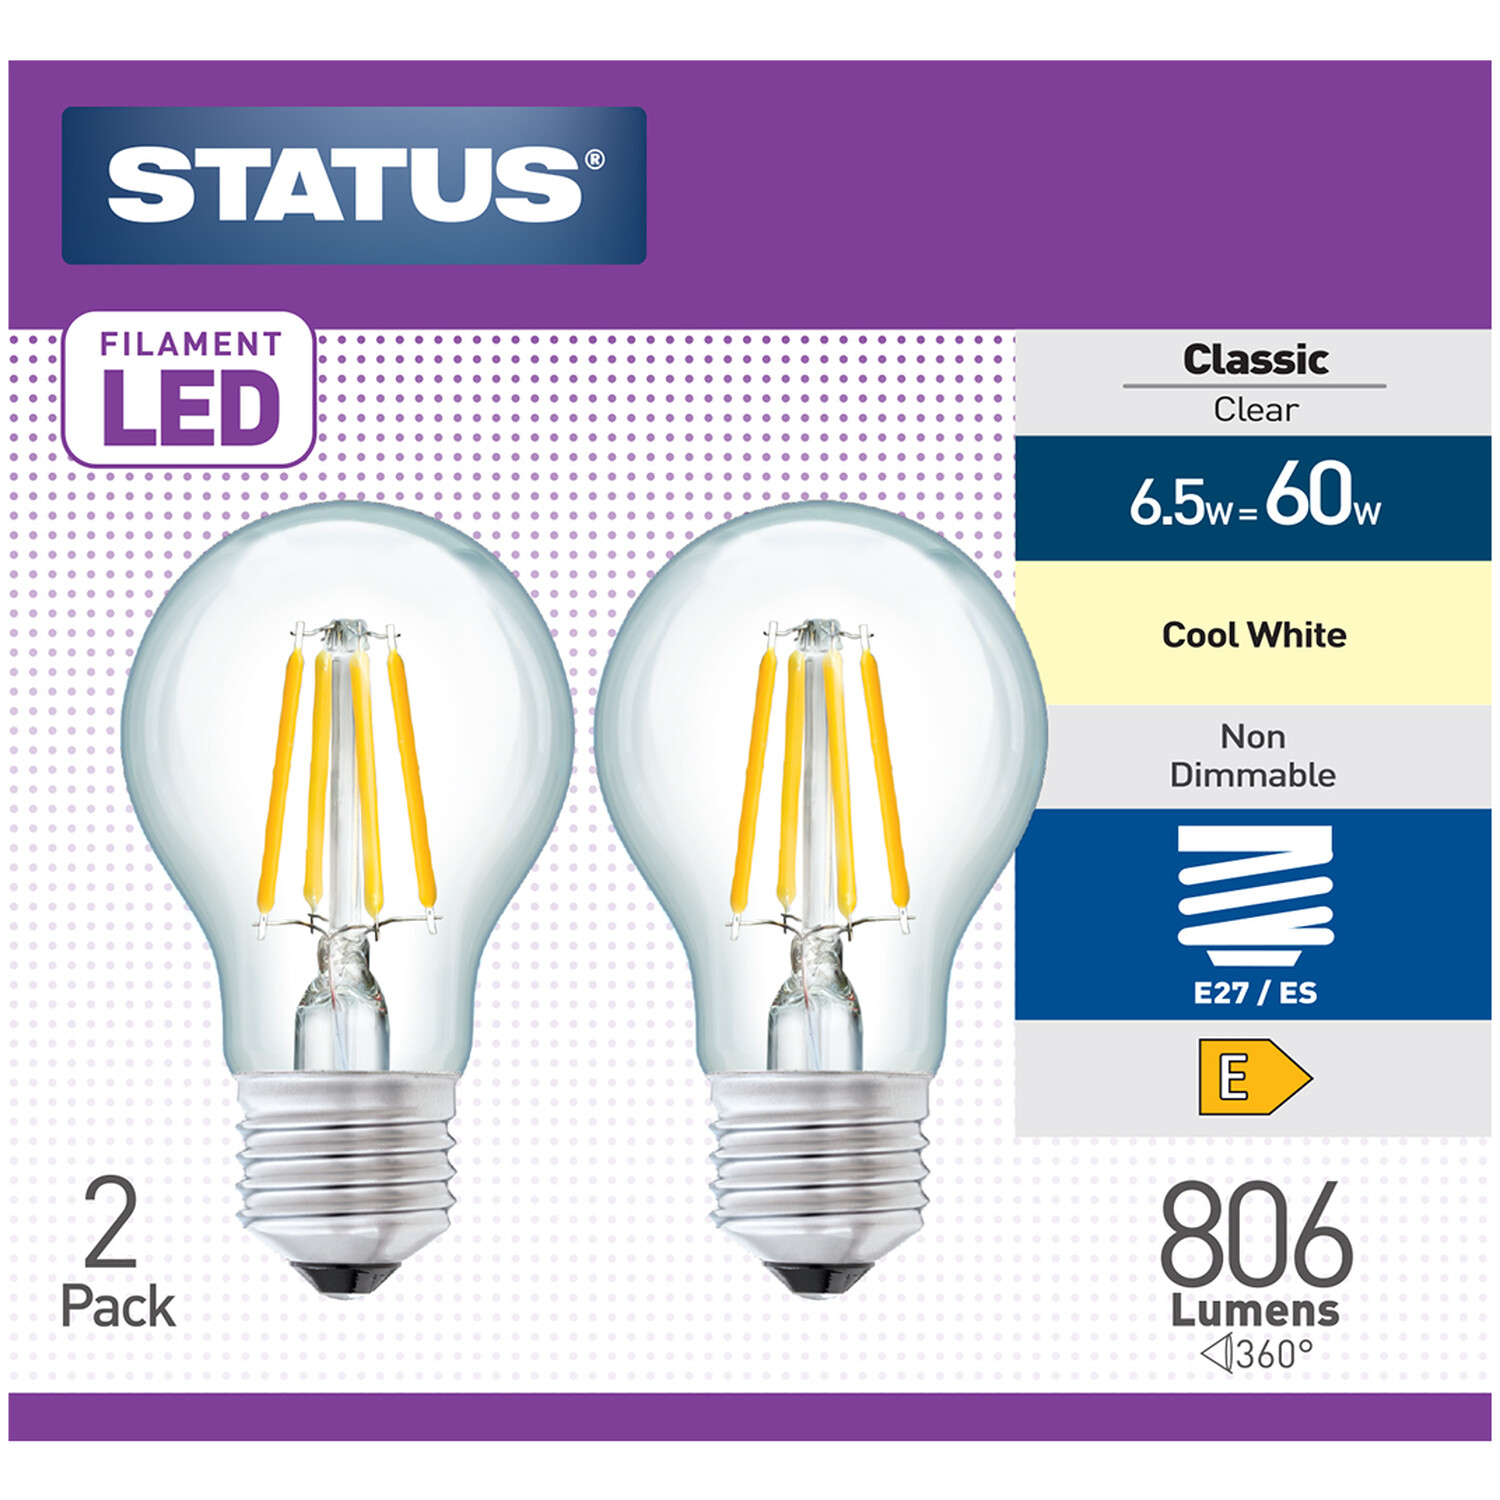 Pack of 2 Status Filament LED 6.5W Cool White Lightbulbs Image 1